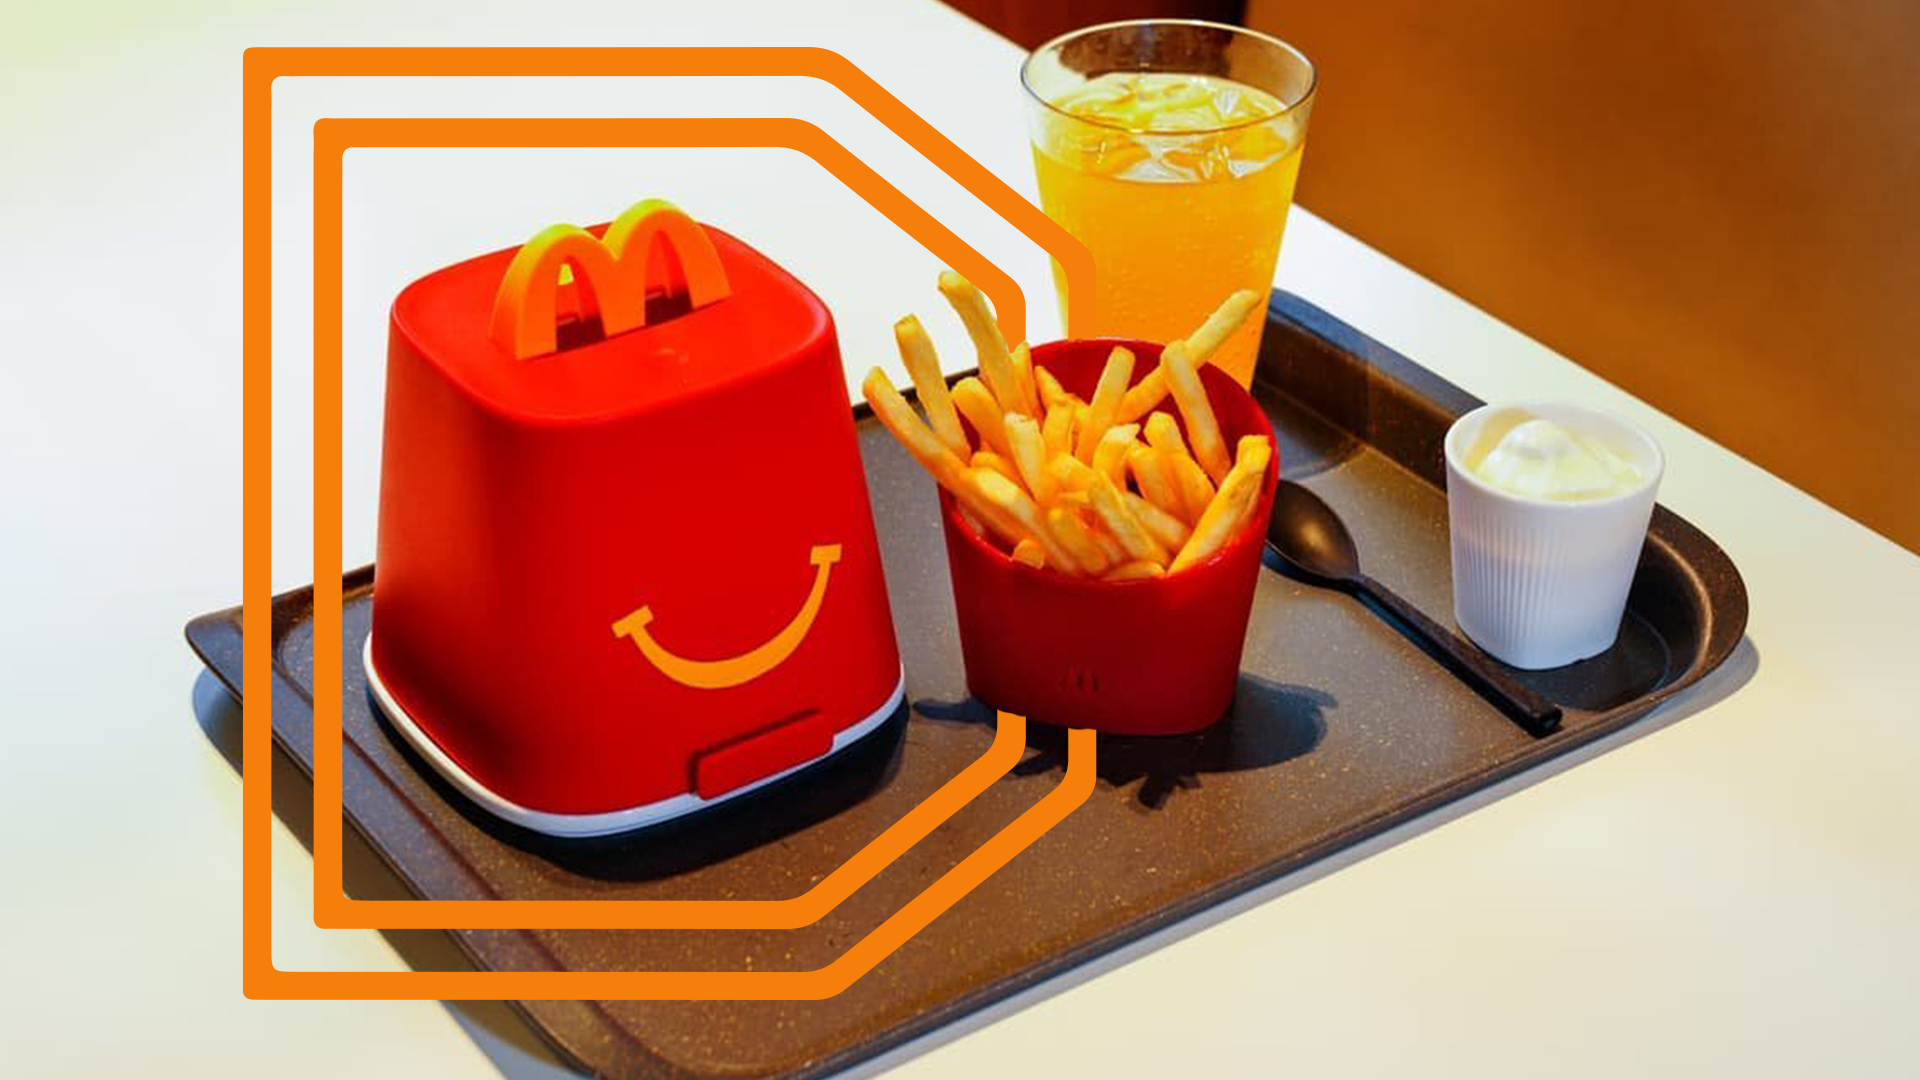 Fast-Food Chains Test Reusable Cups, Sandwich Boxes - WSJ